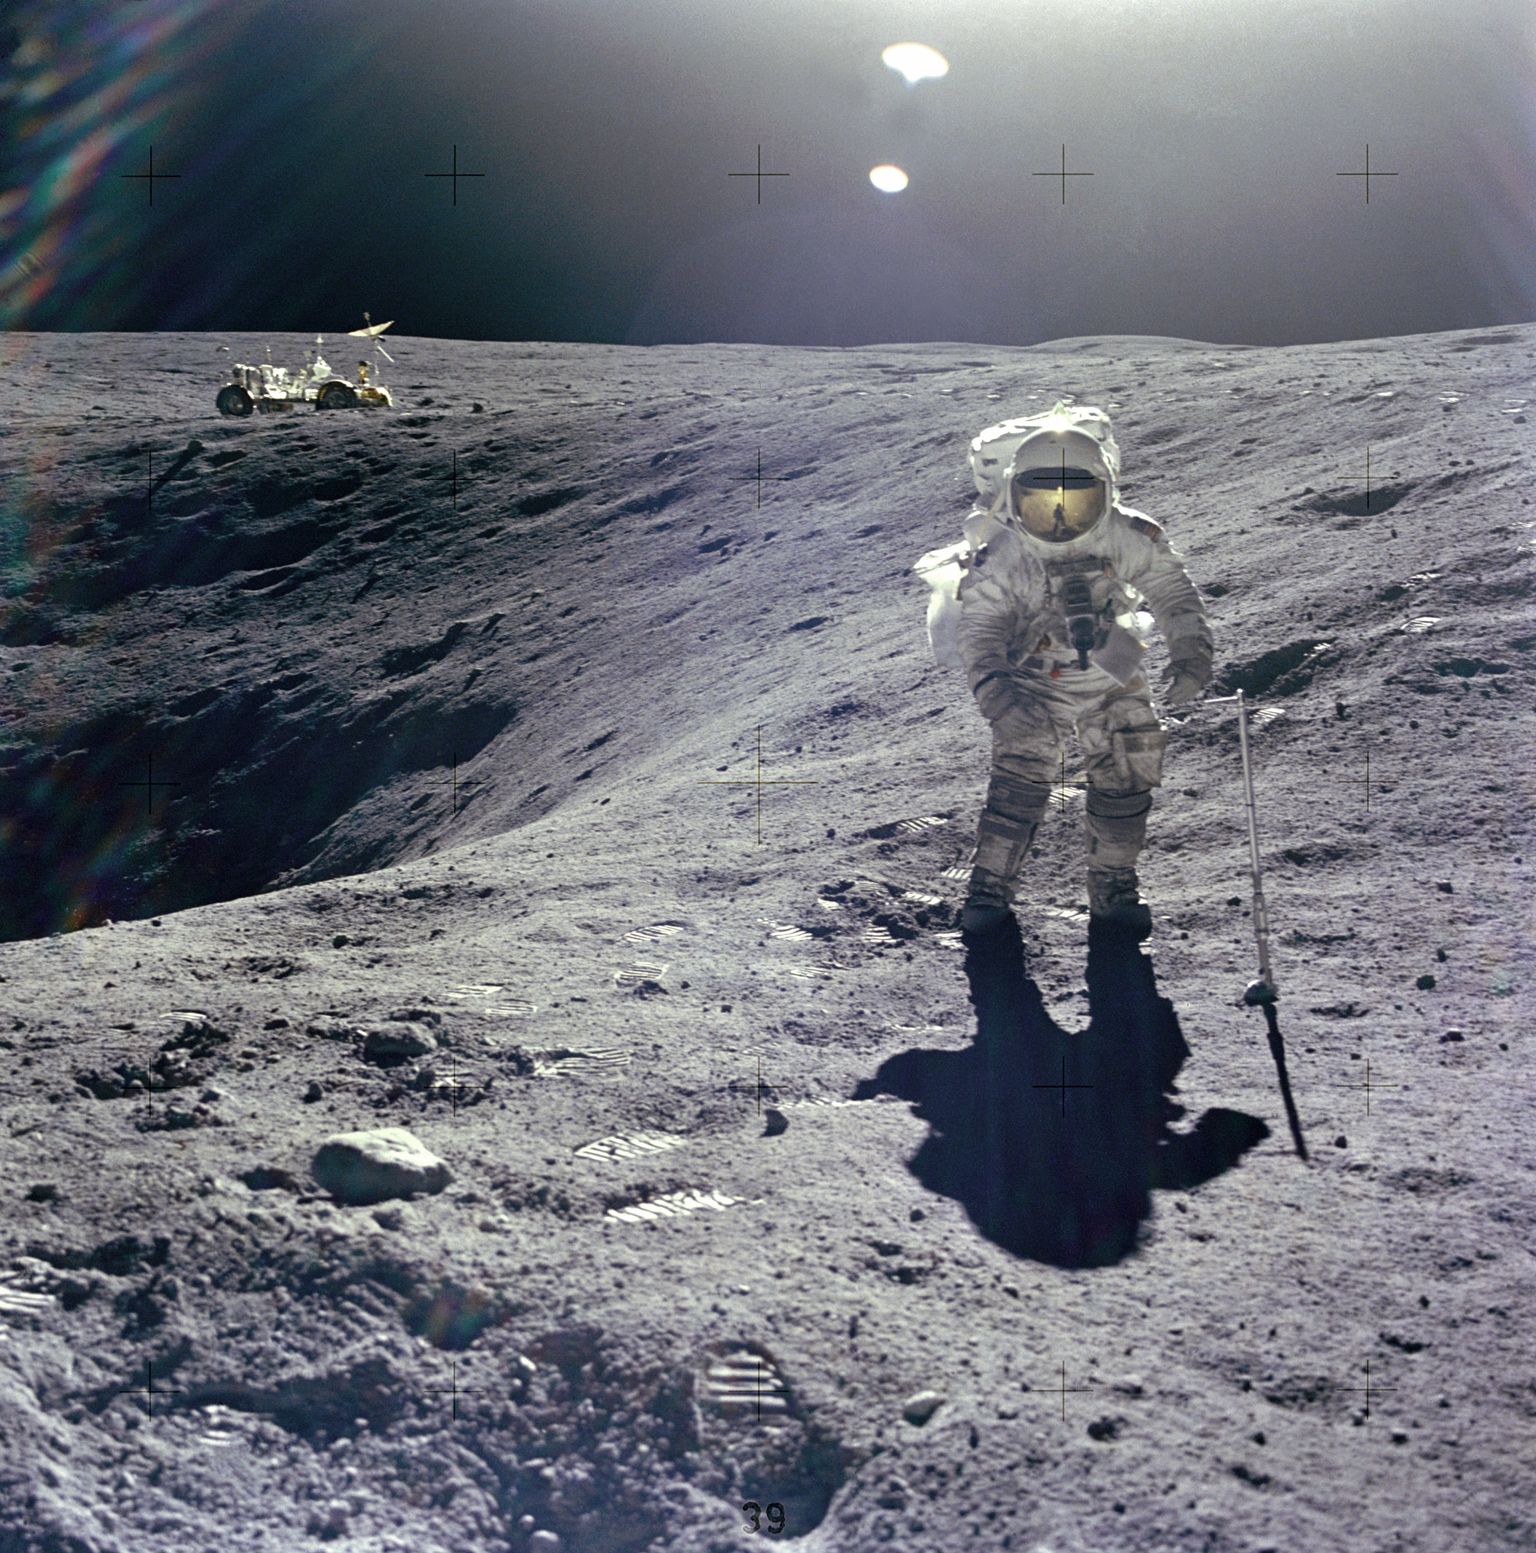 Apollo 16 Astronaut on the Moon, April 20-24, 1972. Public Domain photo, courtesy of National Aeronautics & Space Administration